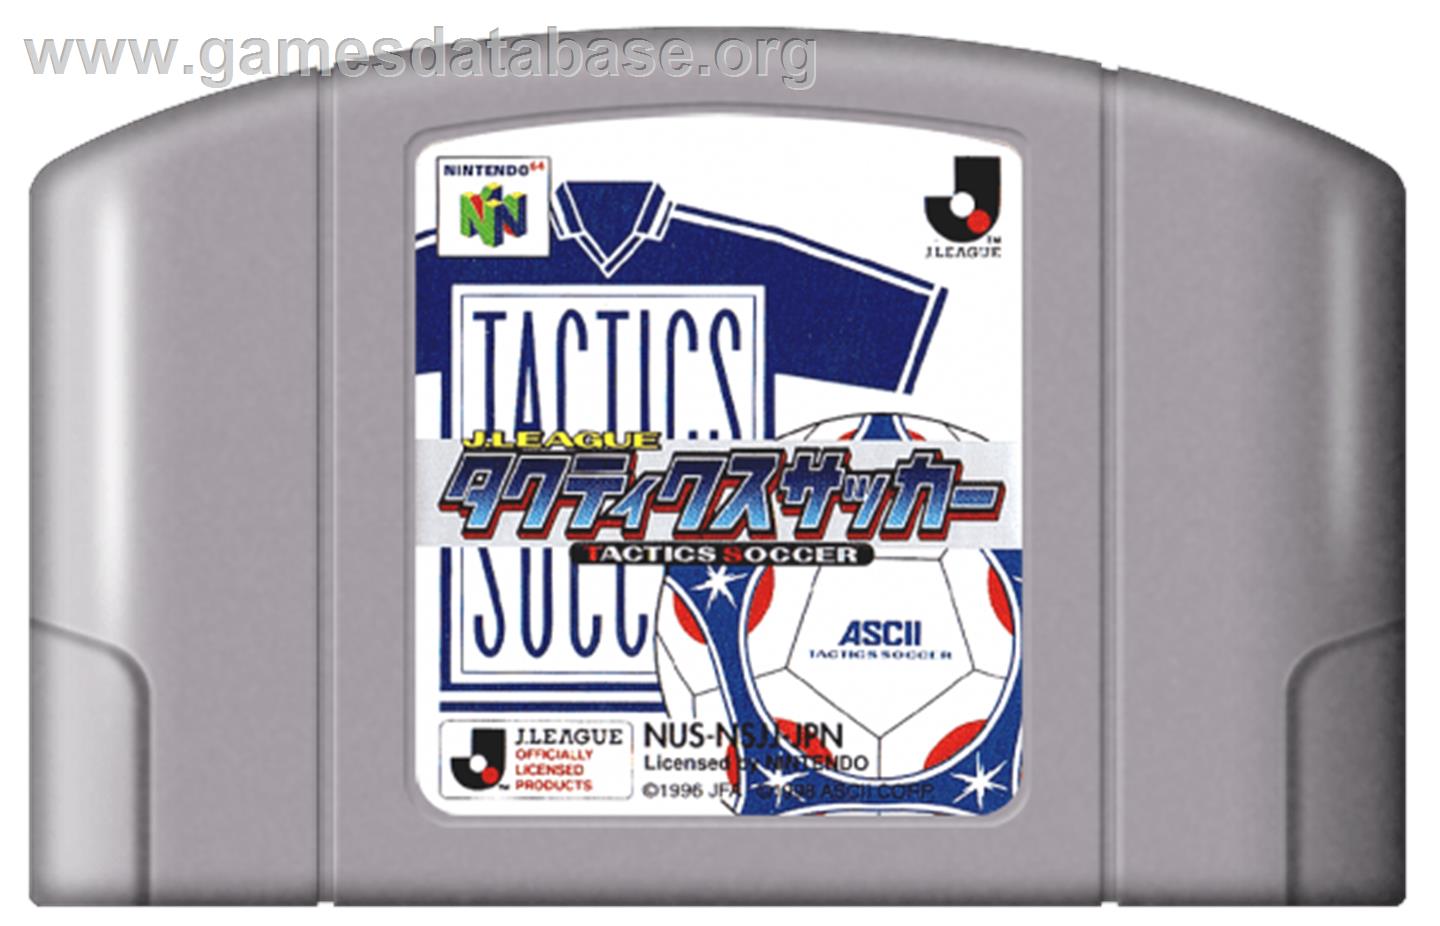 J-League Tactics Soccer - Nintendo N64 - Artwork - Cartridge